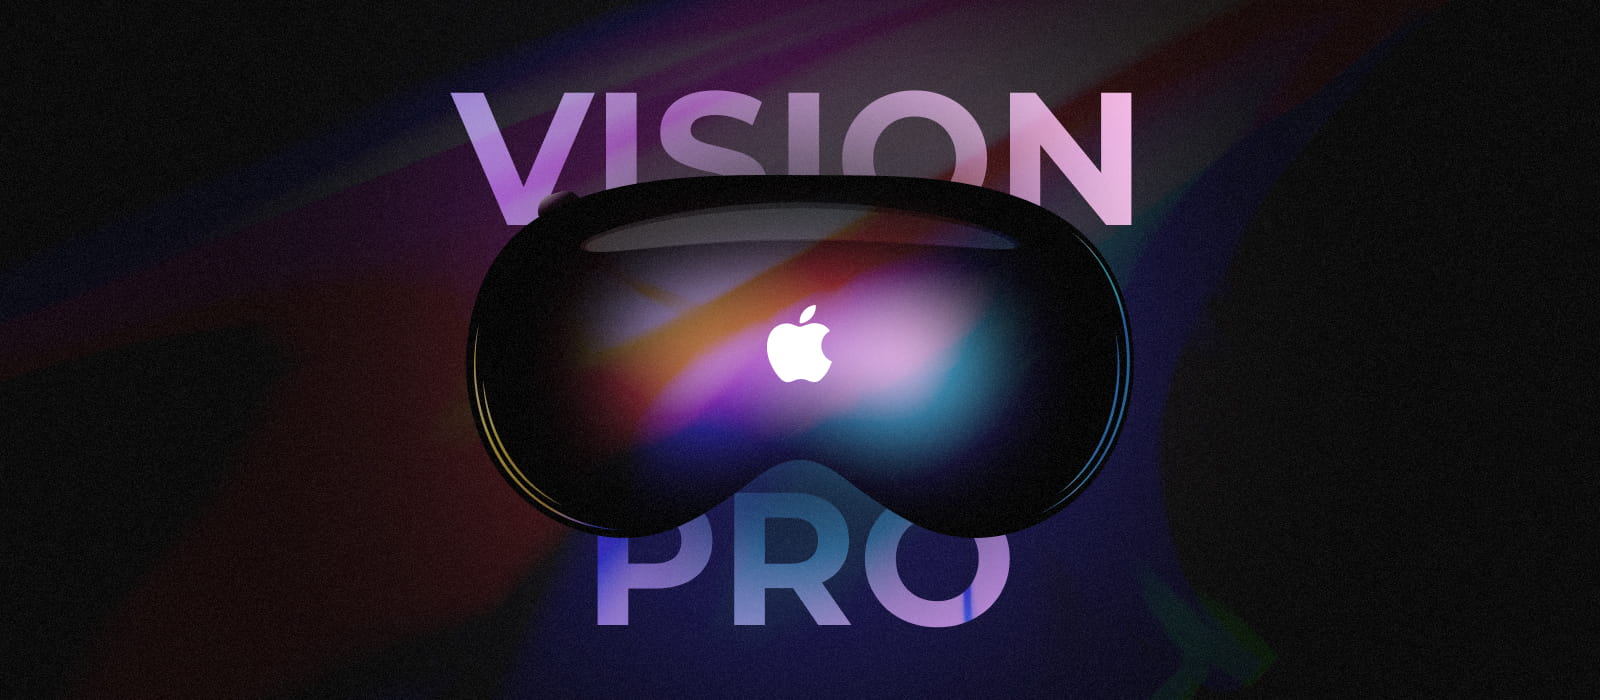 Apple Vision Pro web apps app iPad iPhone